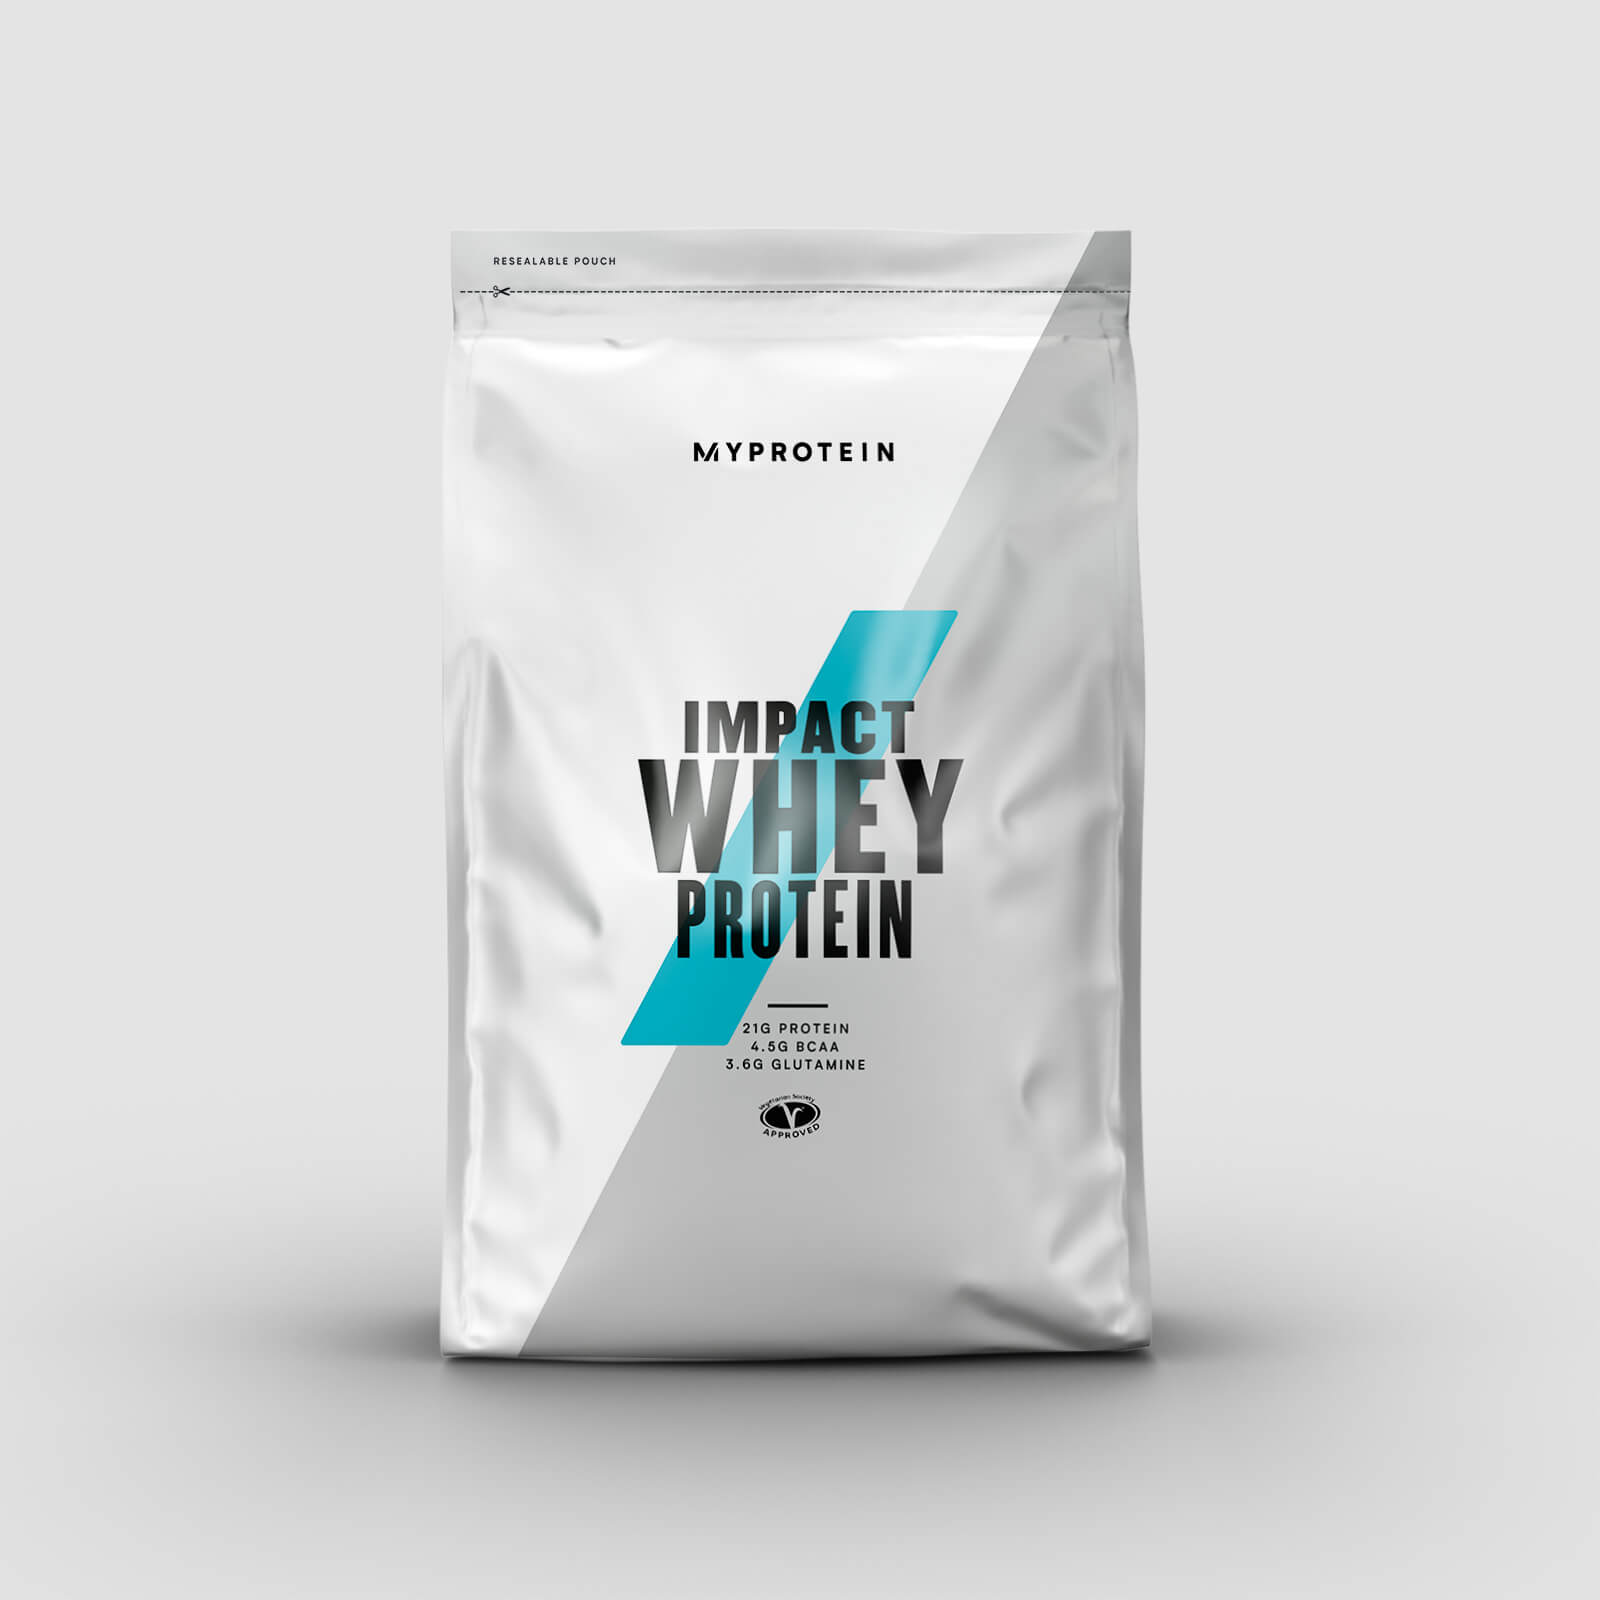 Myprotein Impact Whey Protein - 2.5kg - Chocolate Stevia